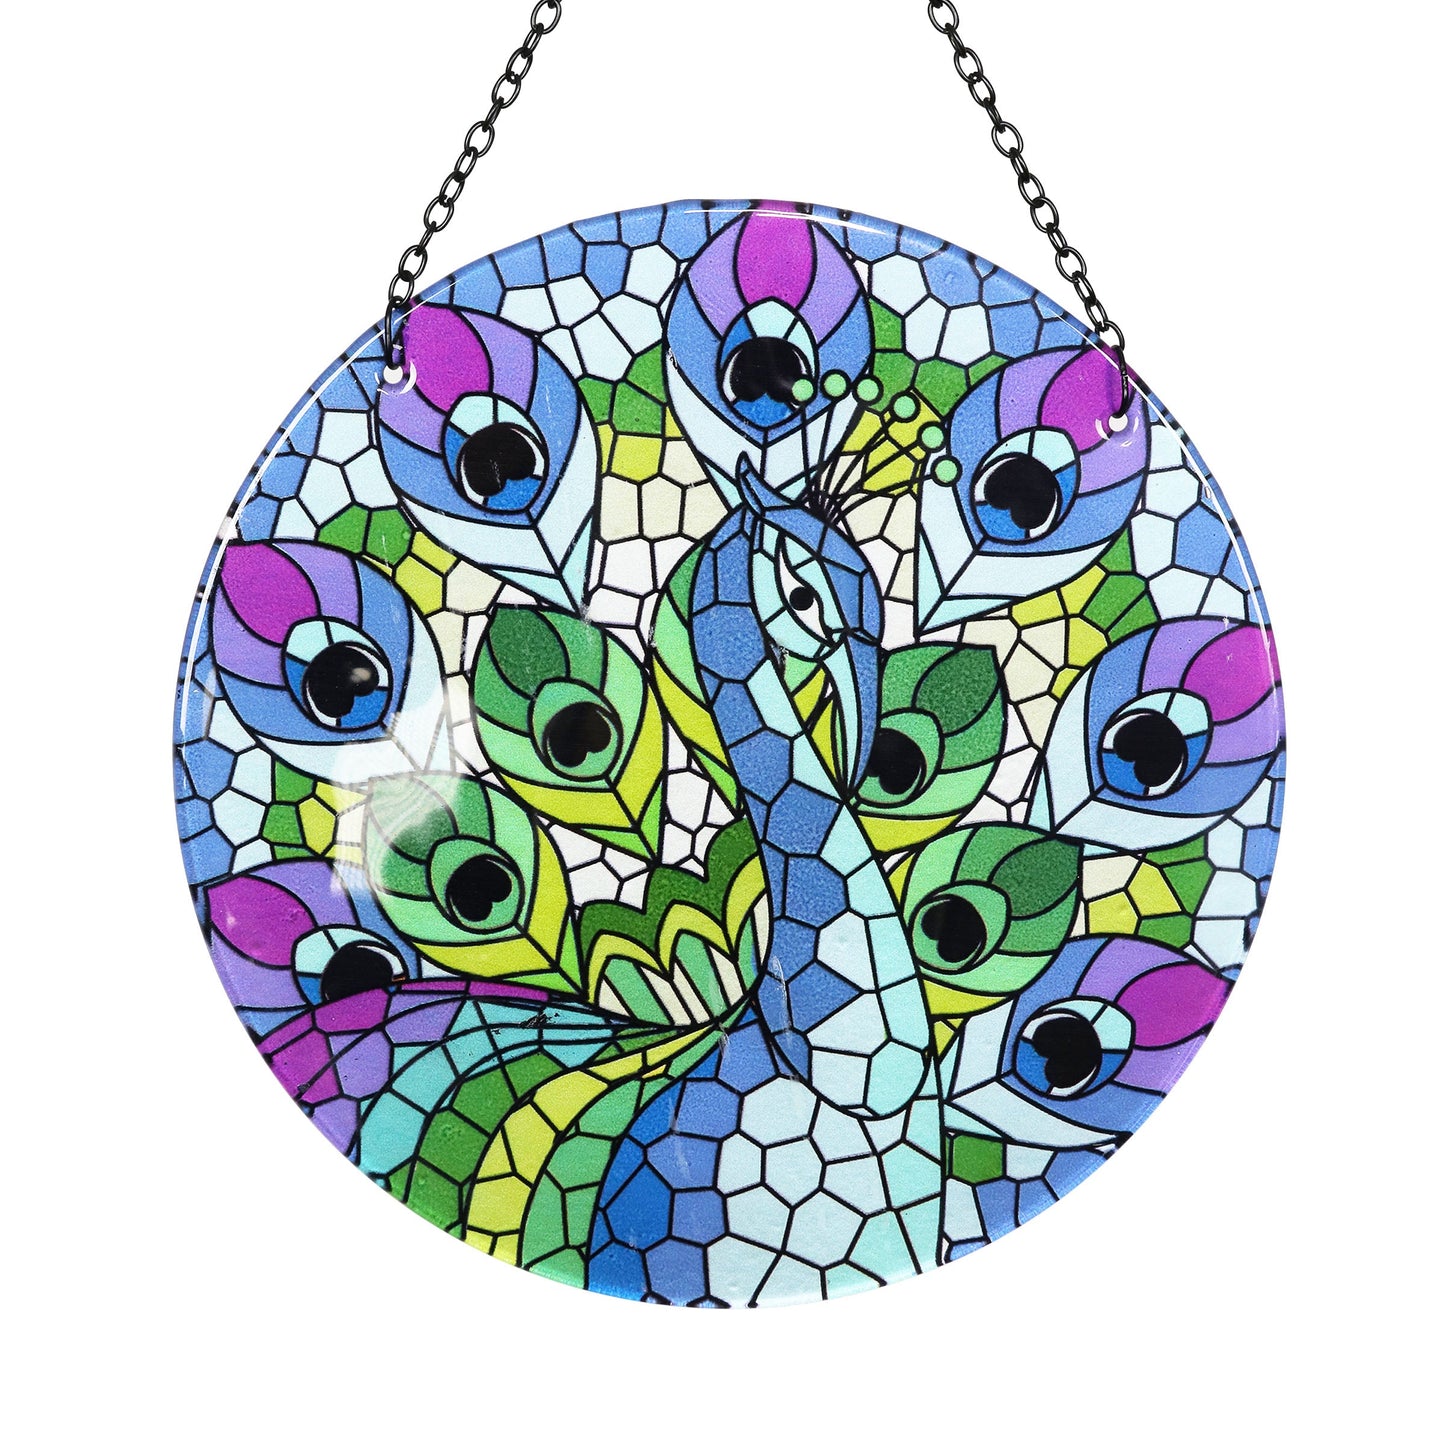 Hanging Mosaic Peacock Suncatcher, 10 Inch